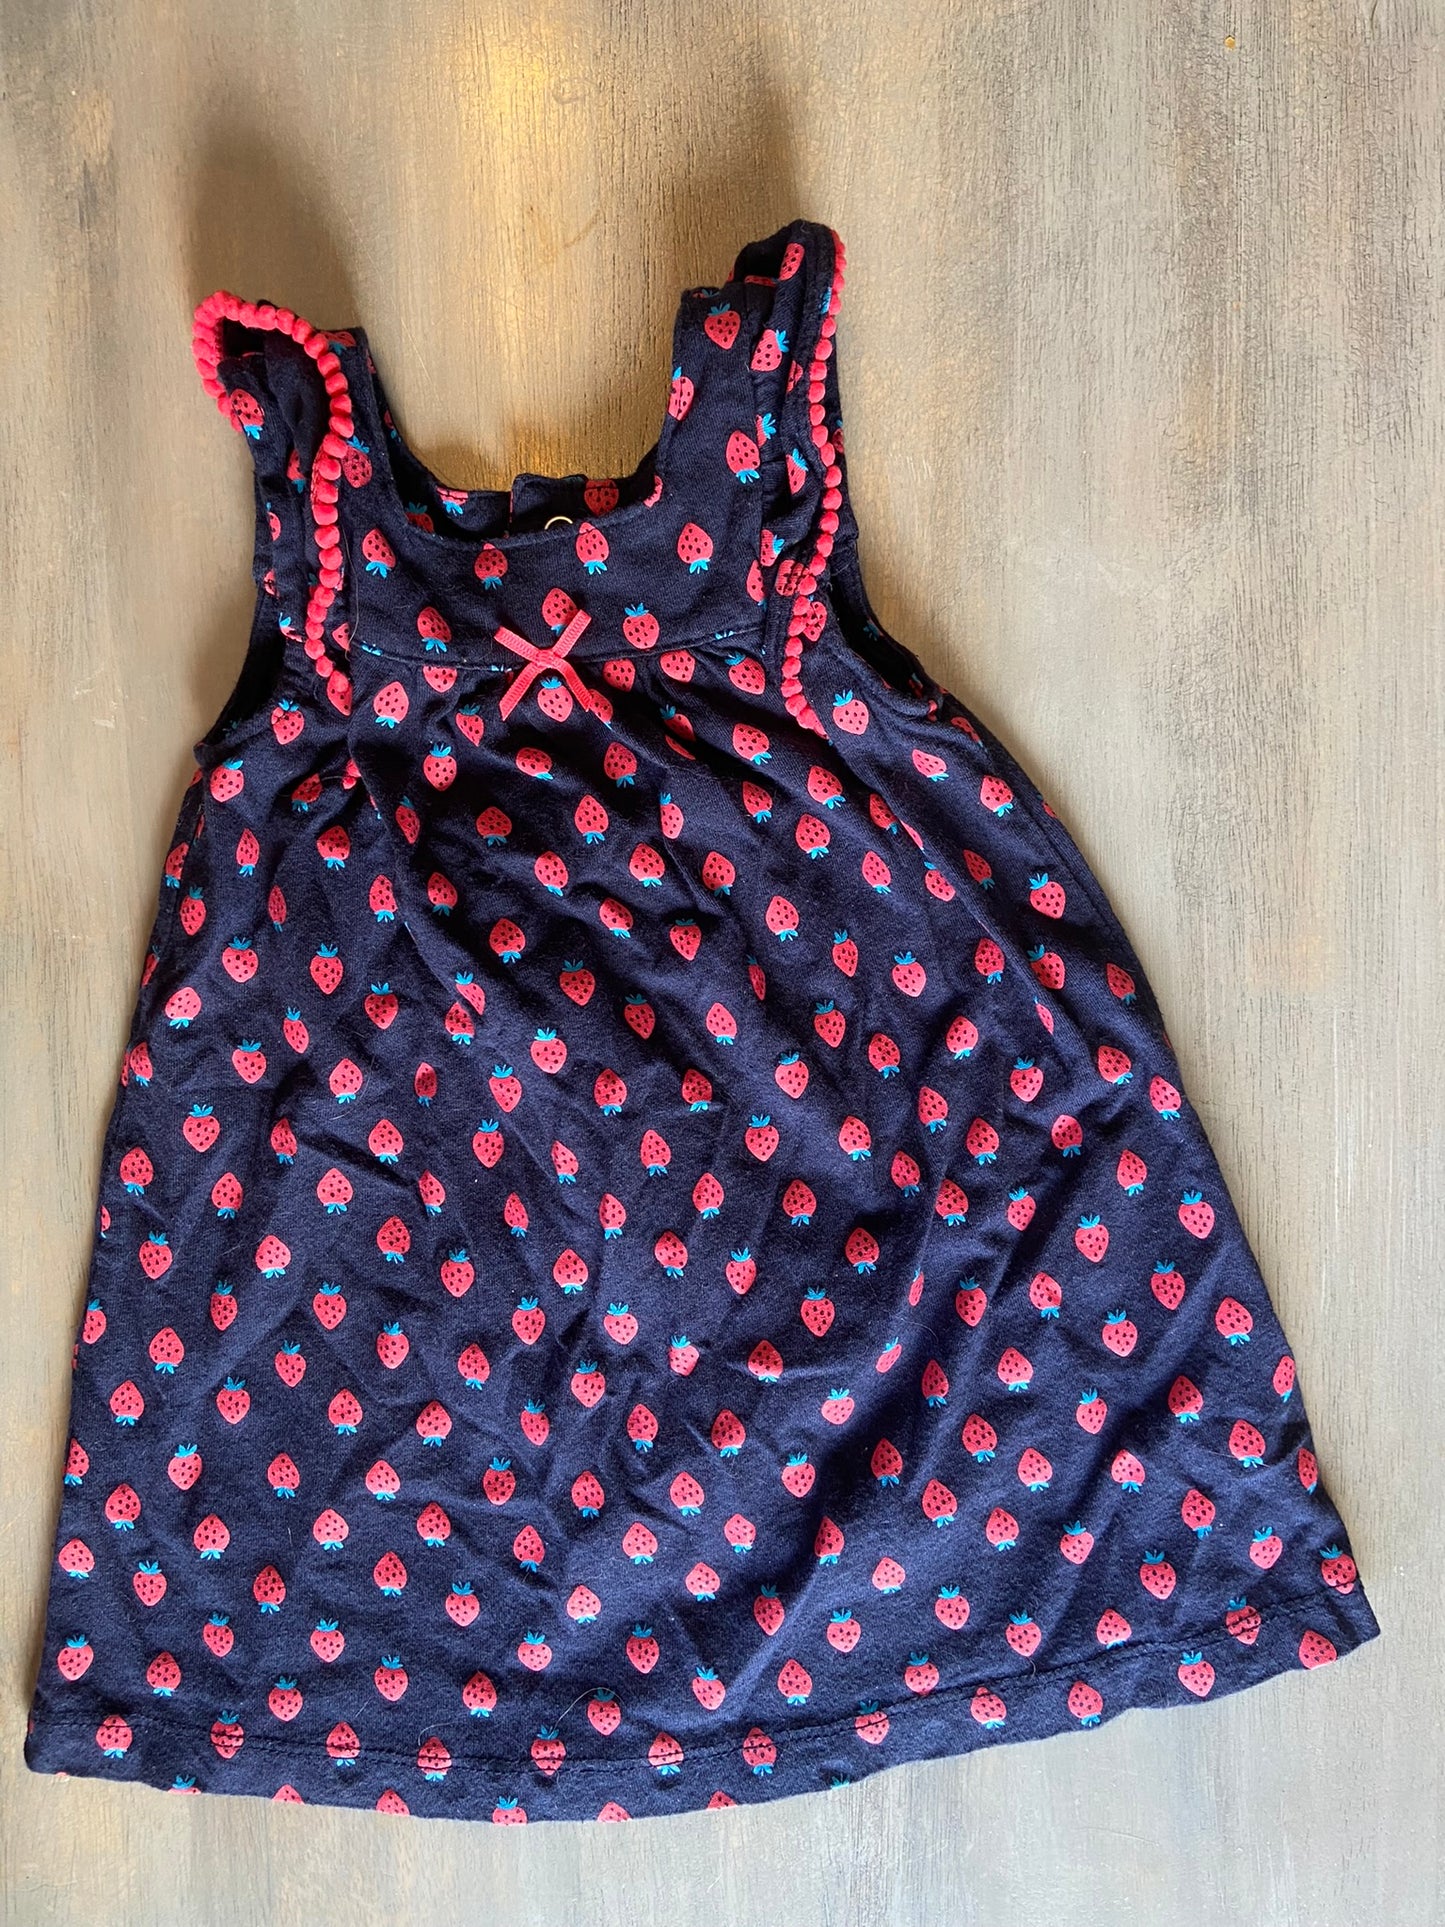 Girls 12 month strawberry dress